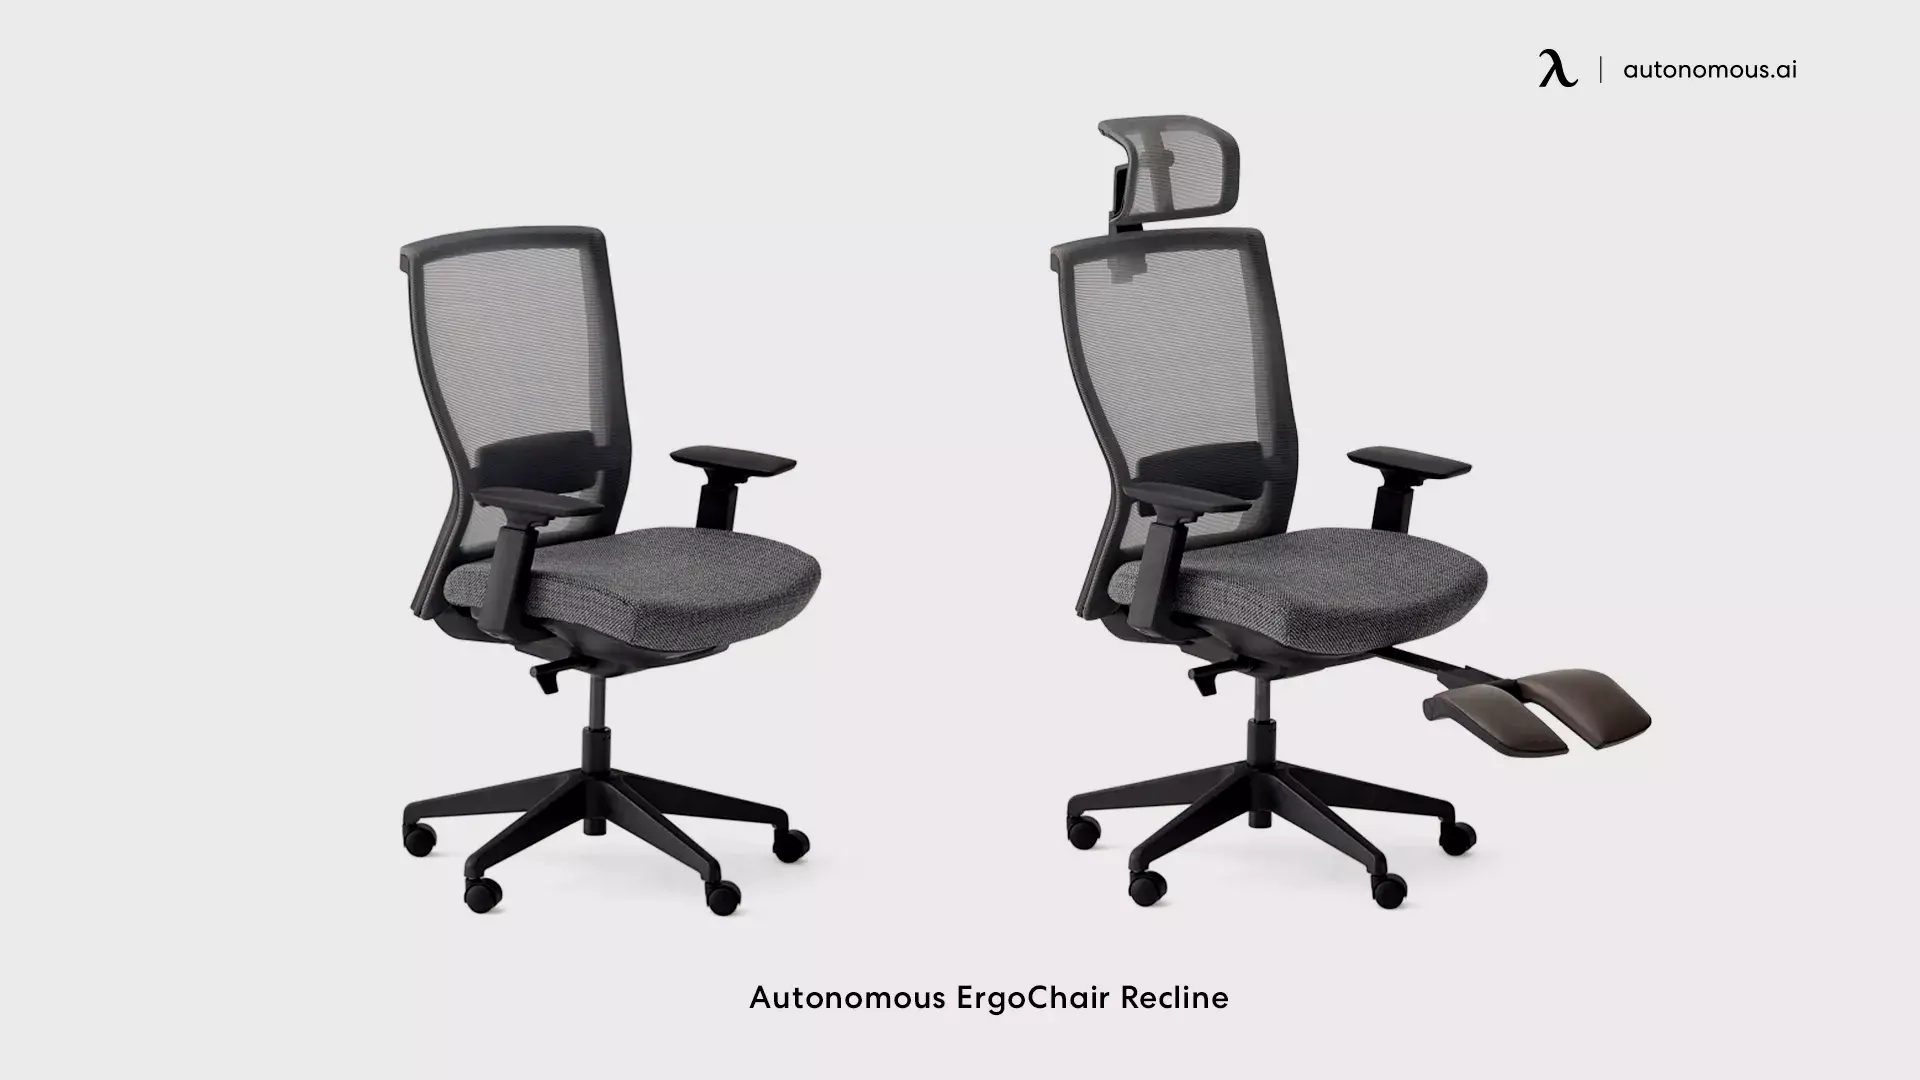 ErgoChair Recline really nice office chairs